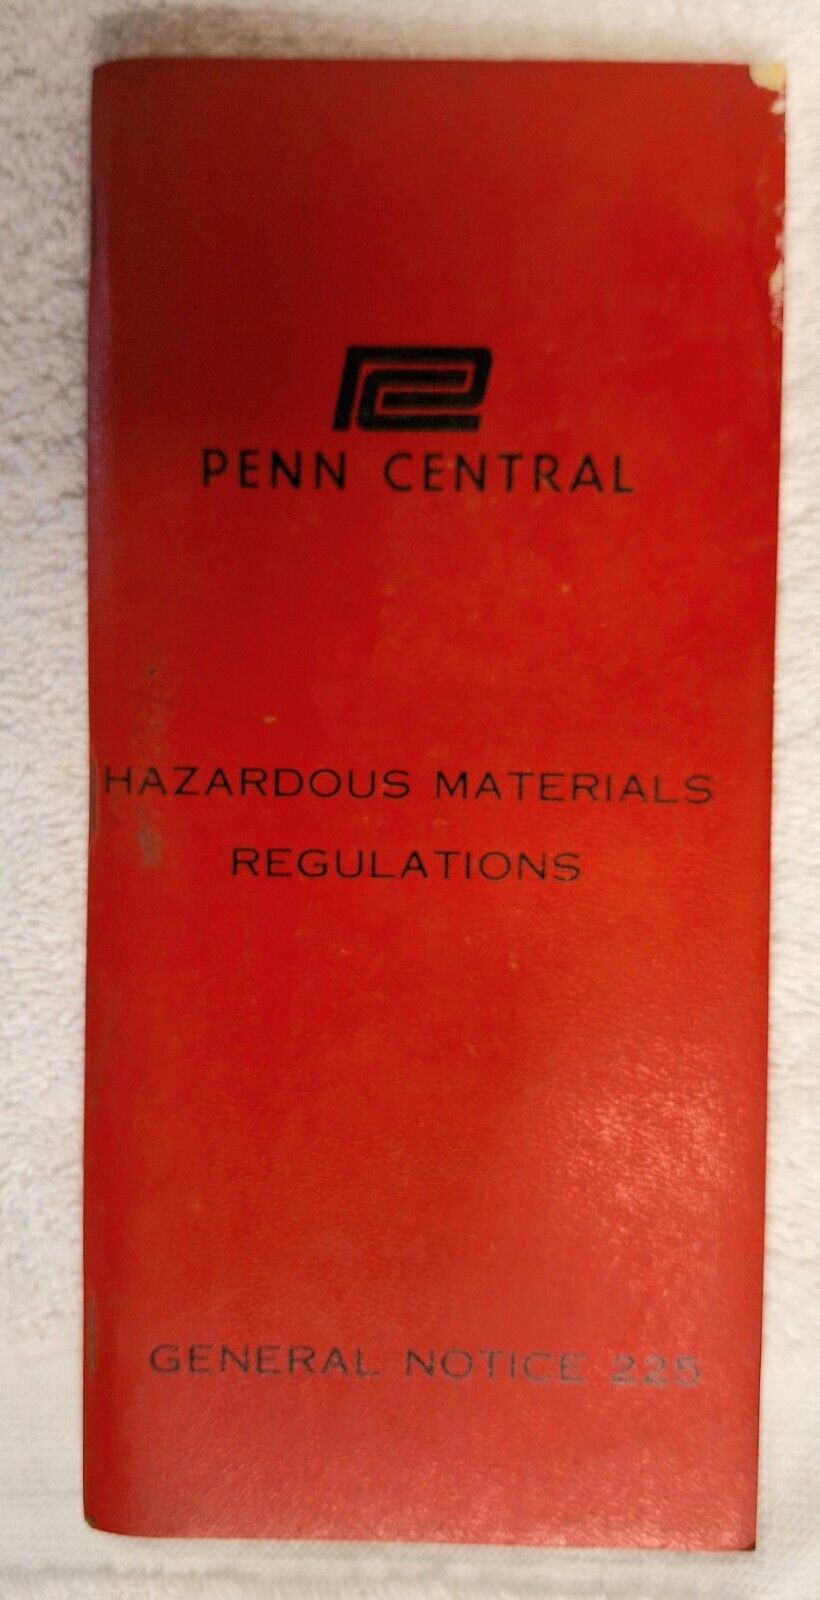 1969 Penn Central Railroad Hazardous Material Manual